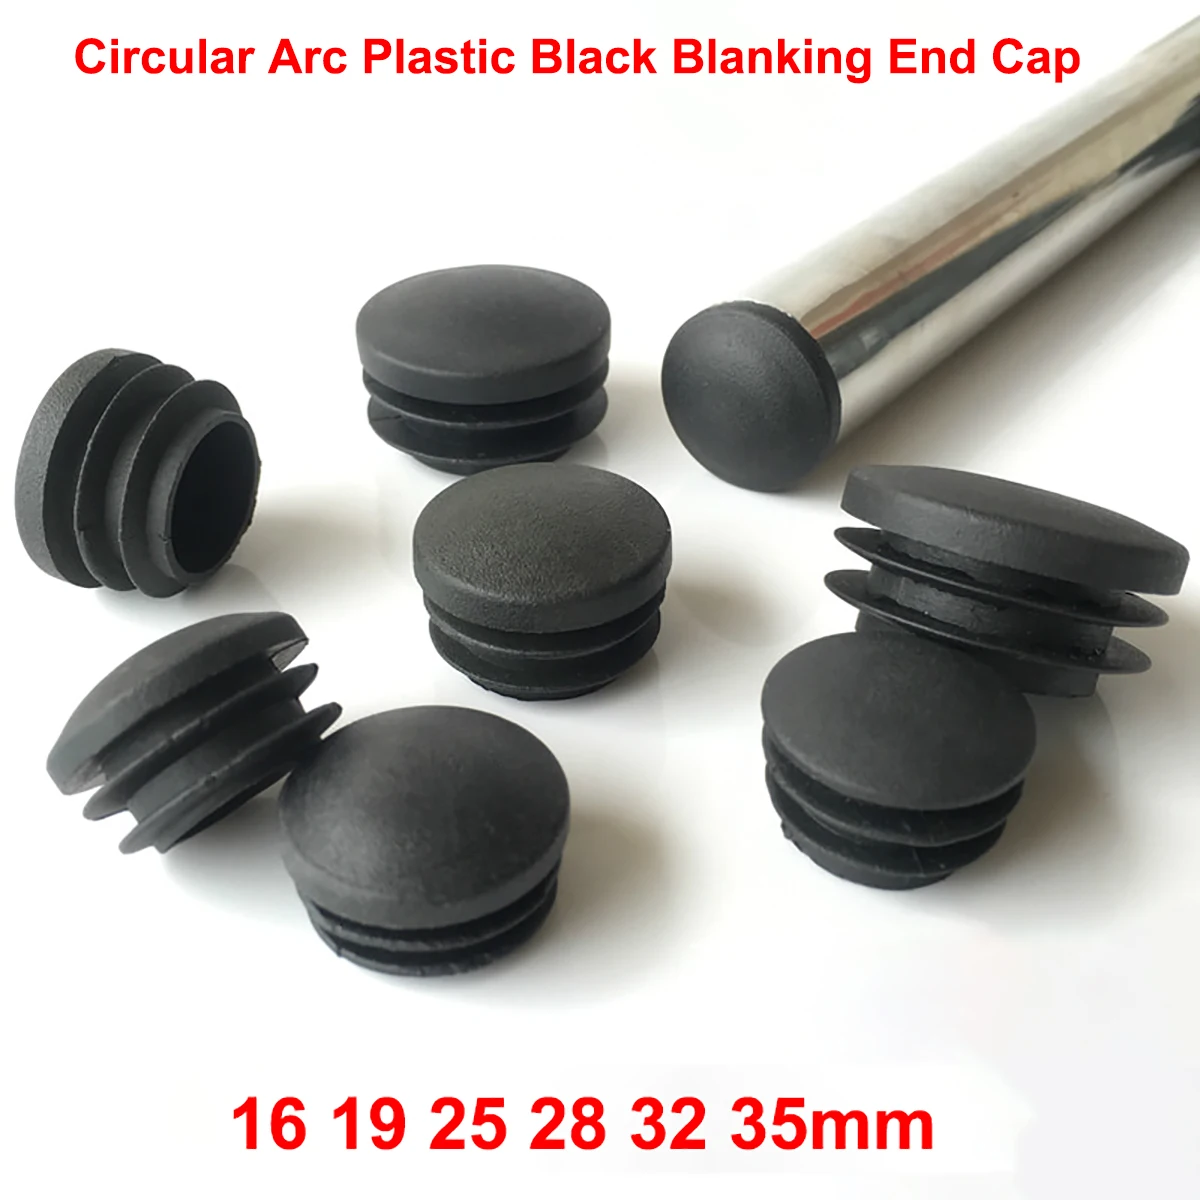 

10Pc Circular Arc Plastic Black Blanking End Cap 16 19 25 28 32 35mm Chair Table Feet Cap Pipe Insert Plug Decorative Dust Cover